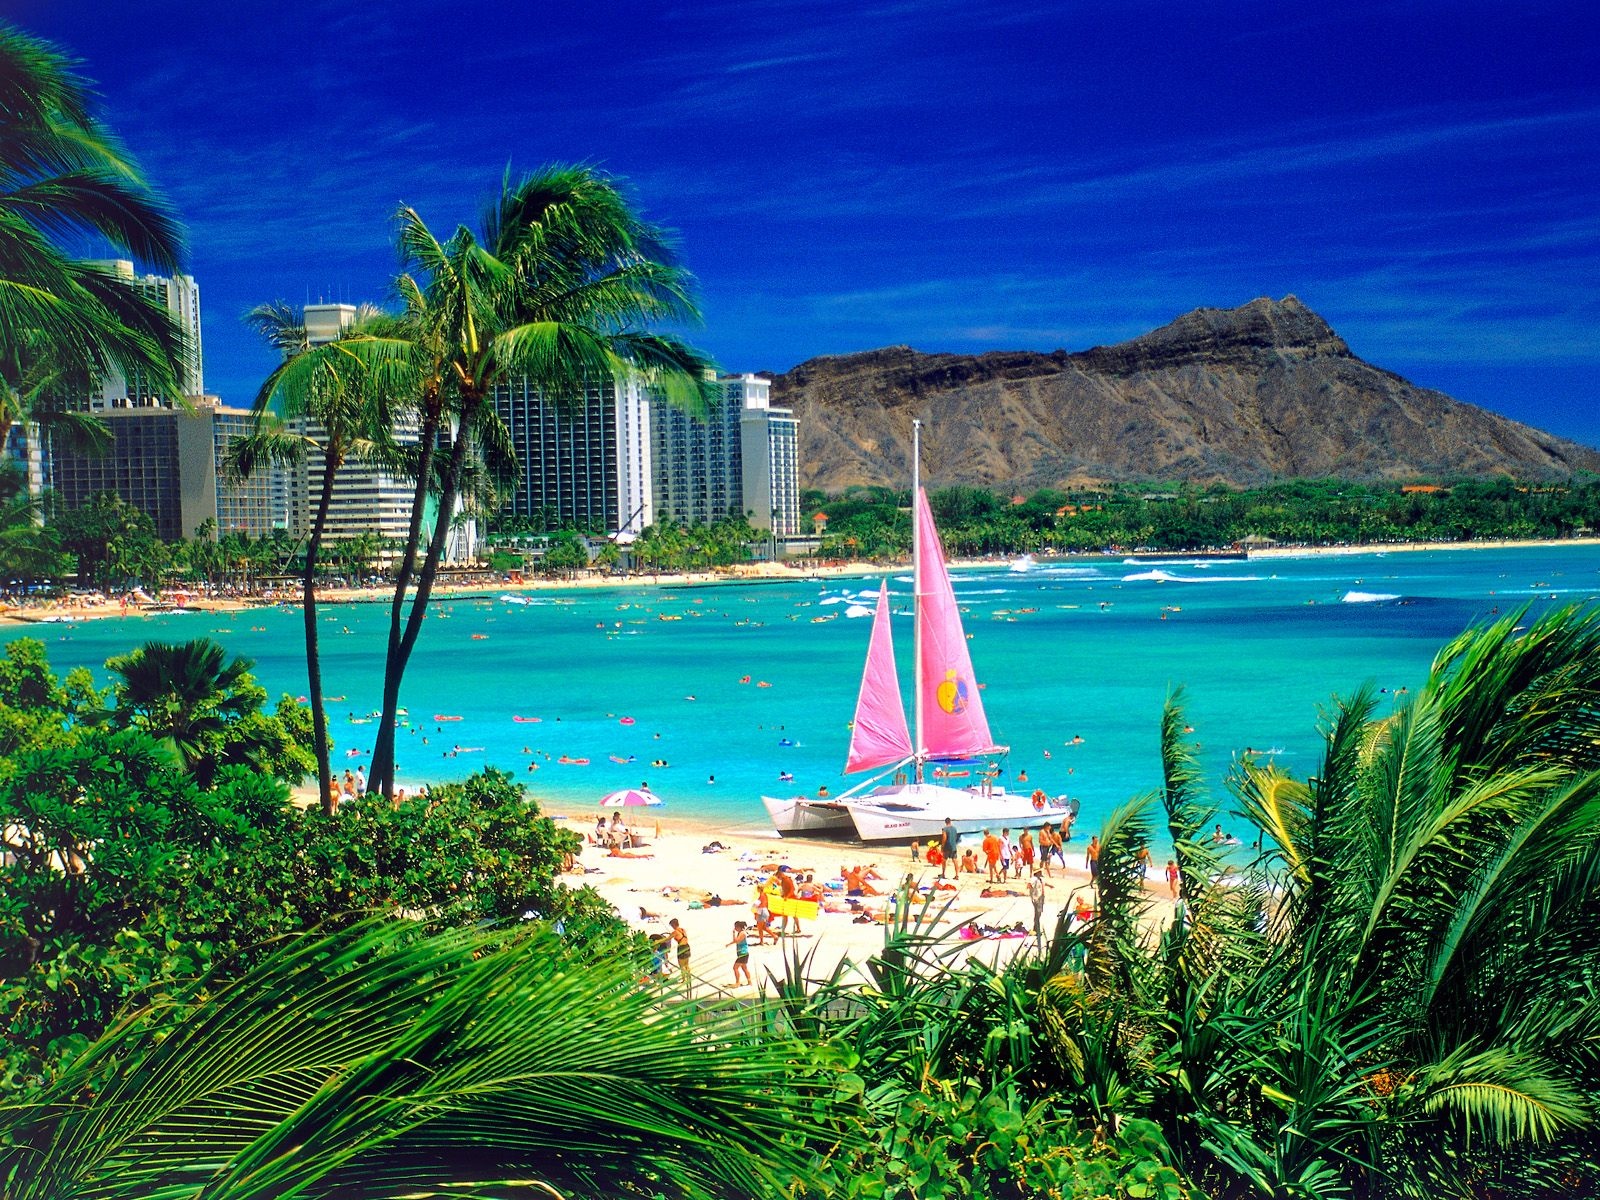 Waikiki Oahu Hawaii Wallpaper in jpg format for free download